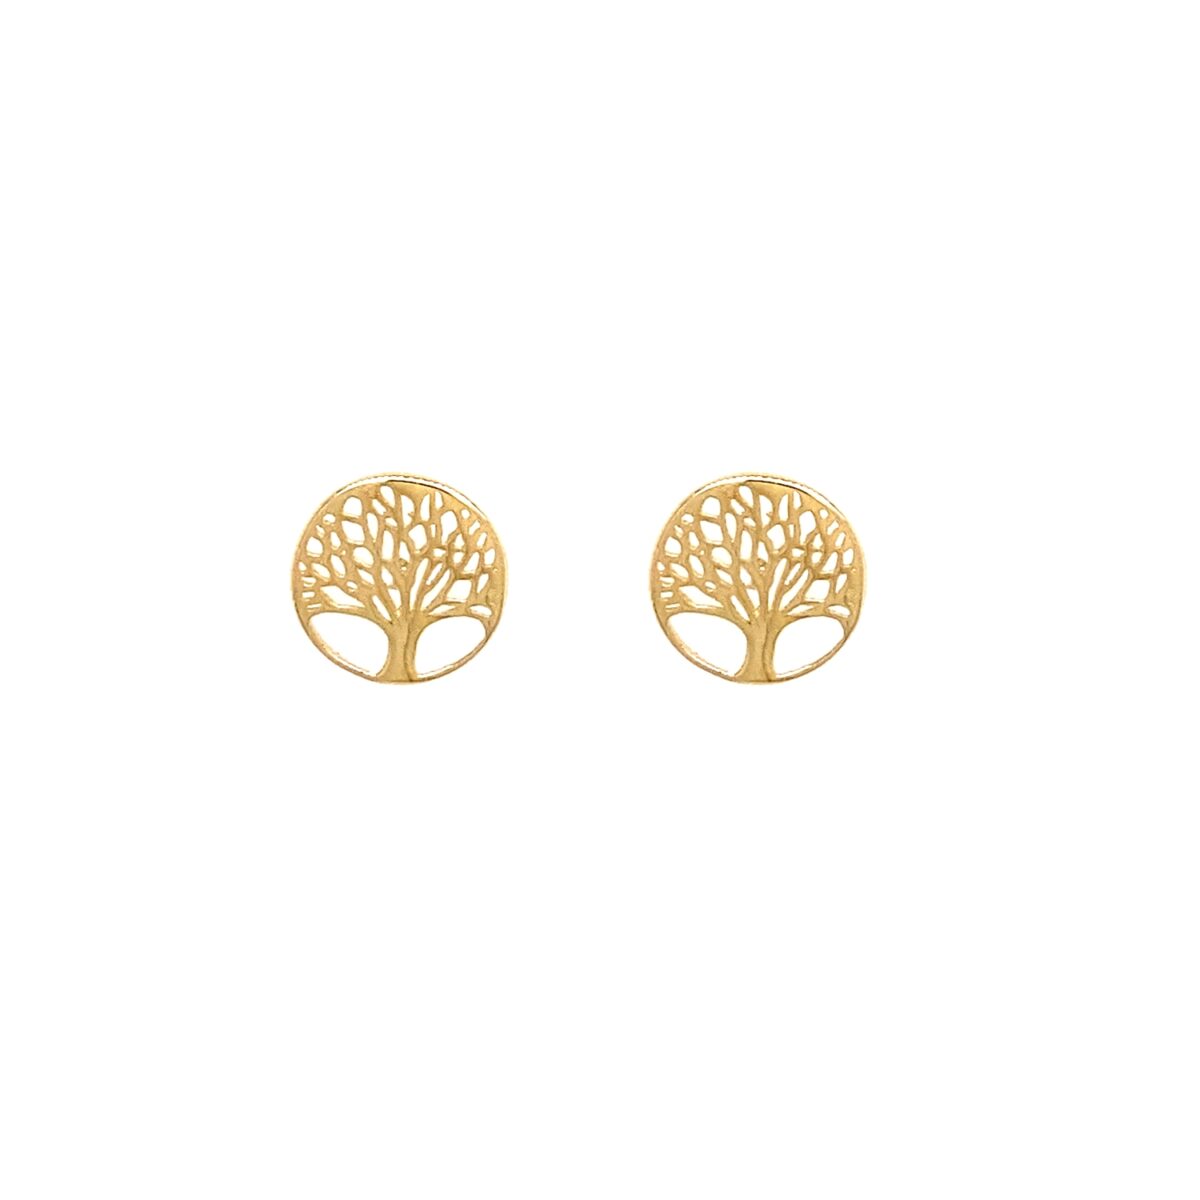 Jewellers - Σκουλαρίκια Δέντρο της Ζωής